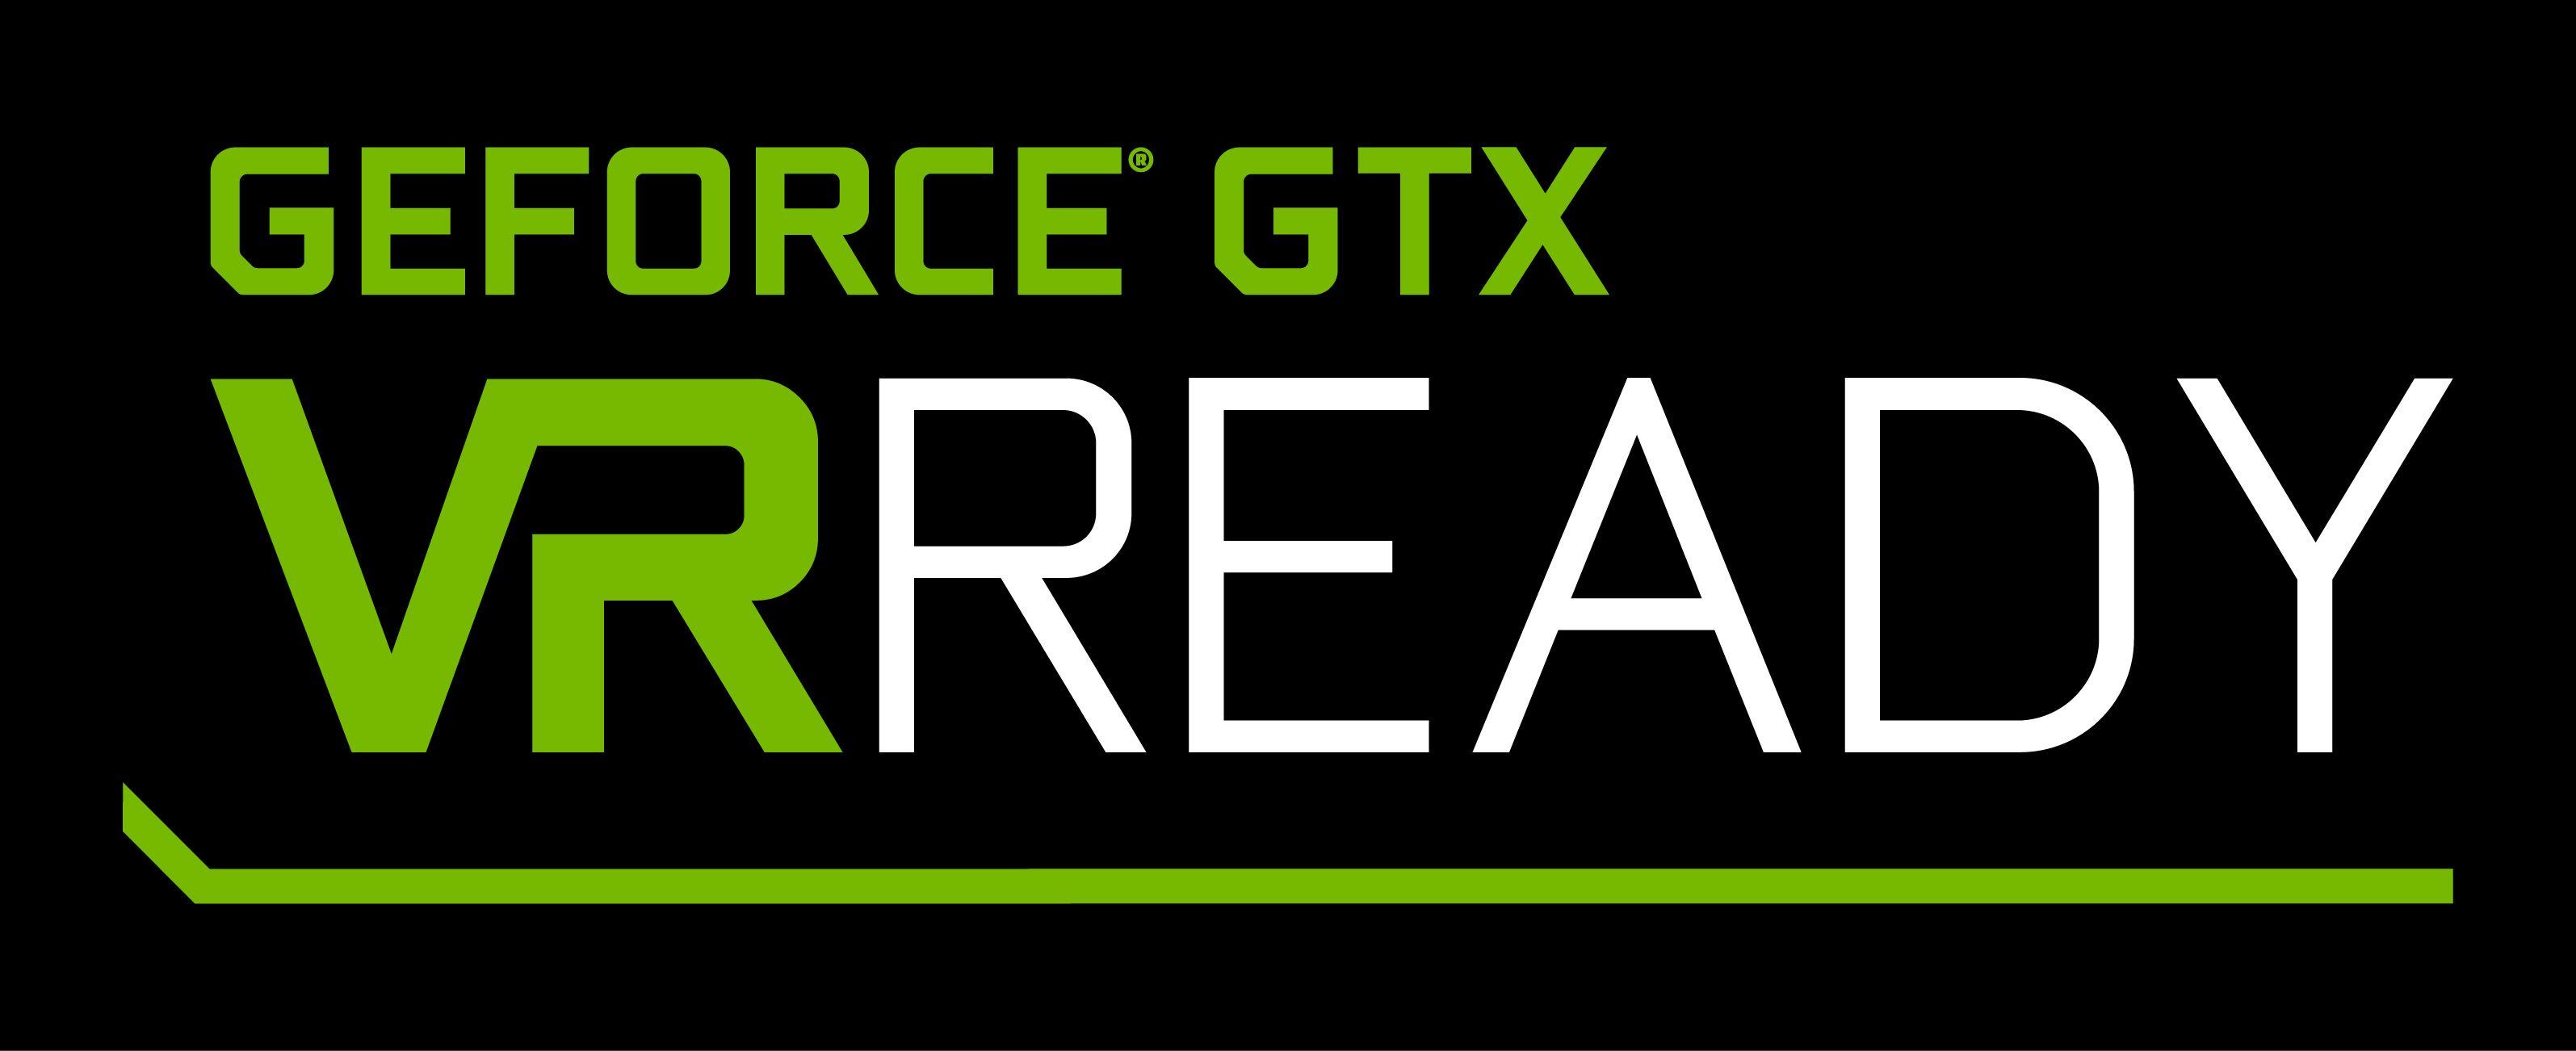 Nvidia Geforce Gtx Logo Logodix